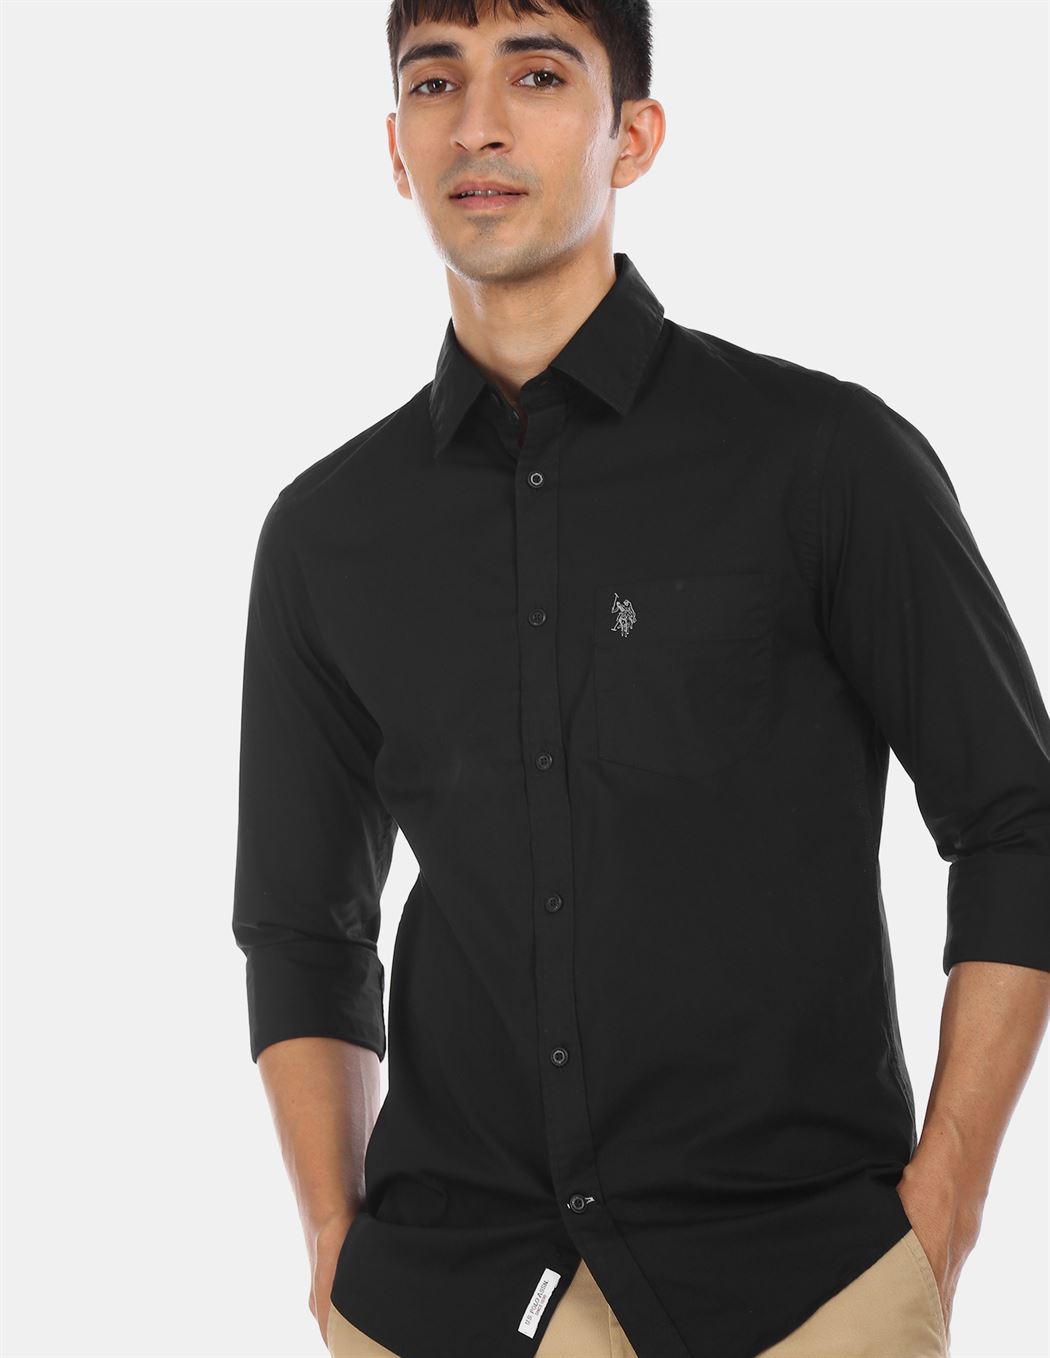 U.S Polo Assn. Men's Casual Wear Black Shirt